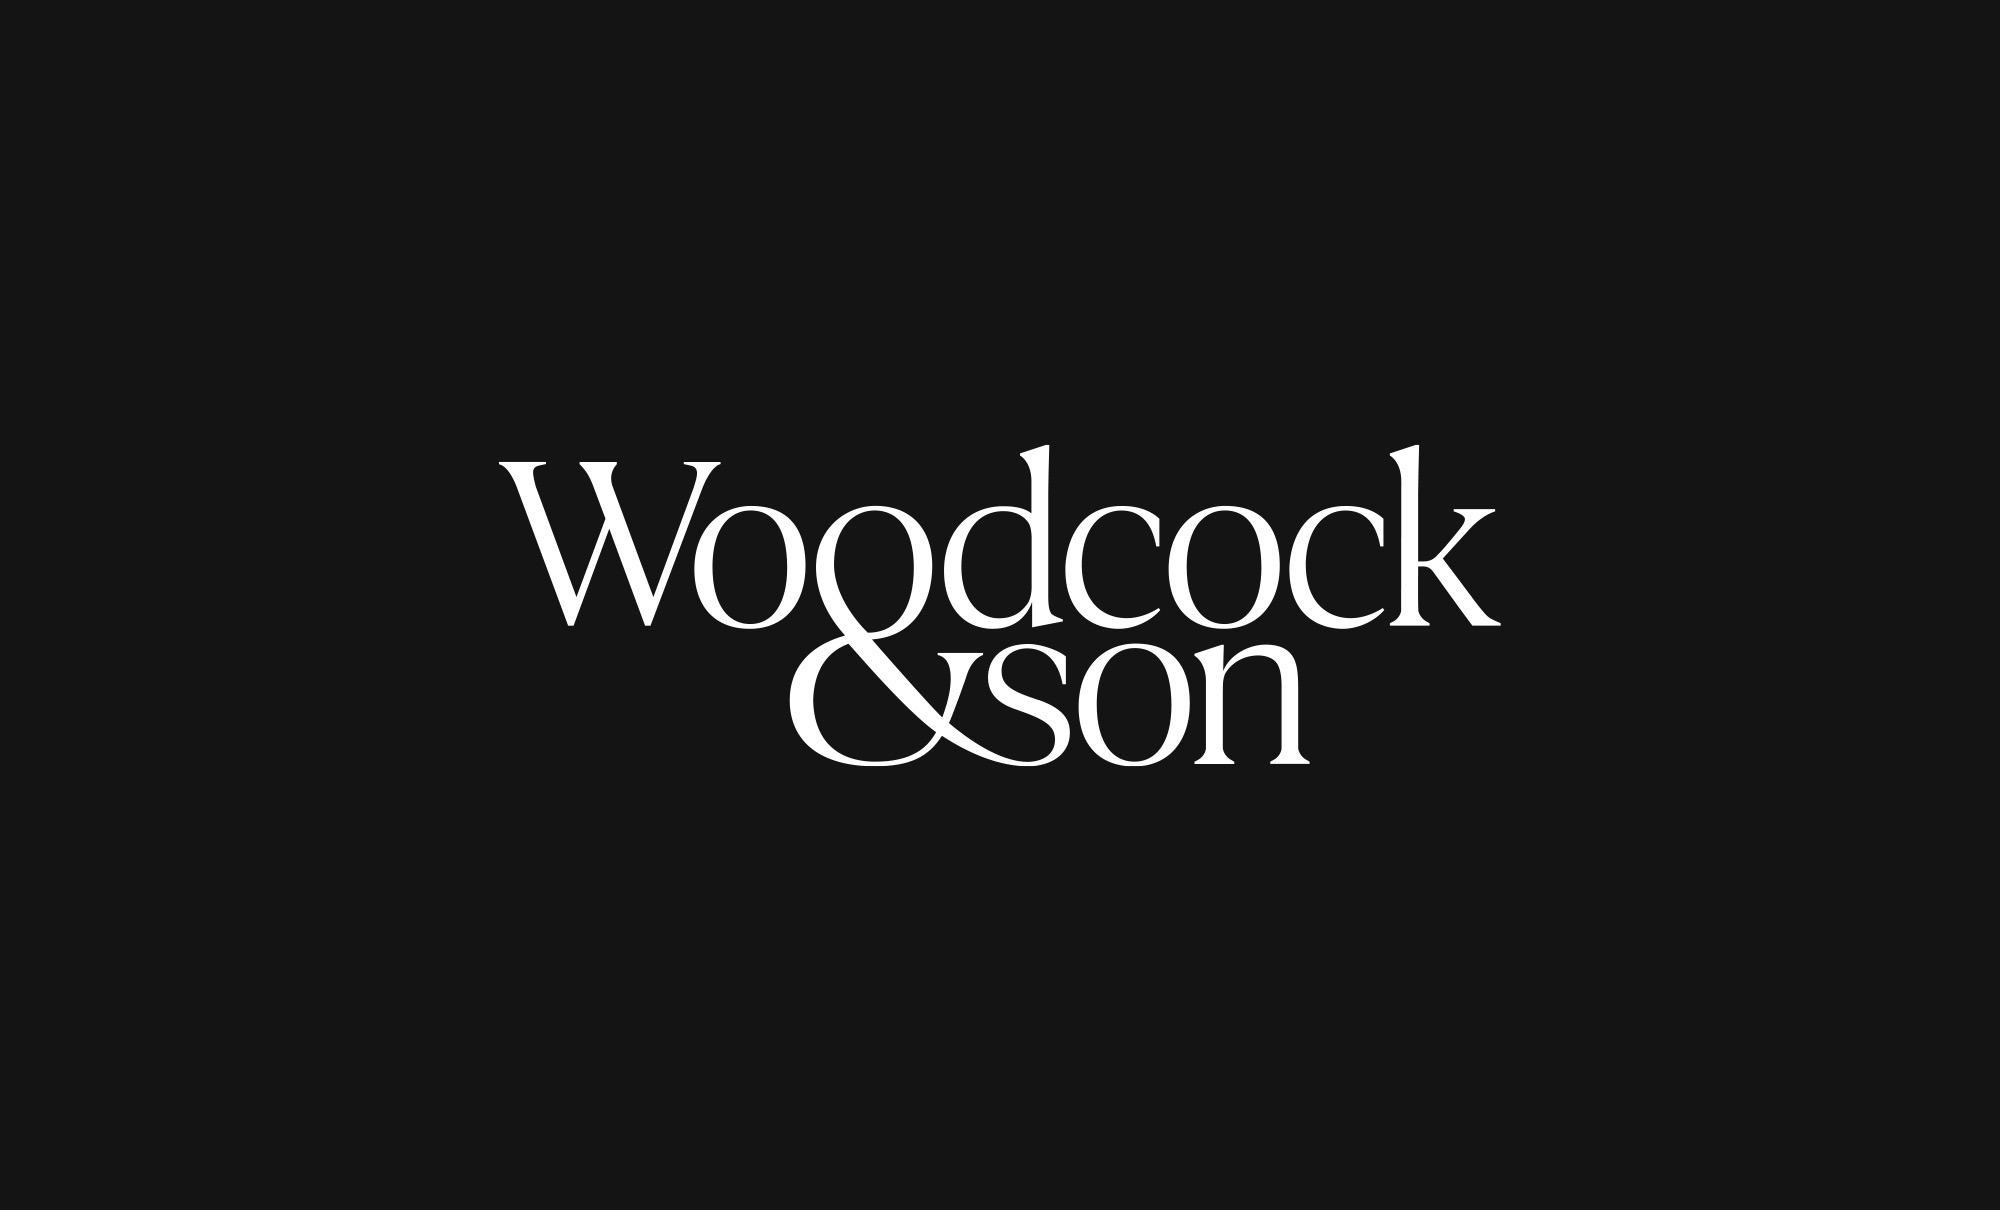 Woodcock and son